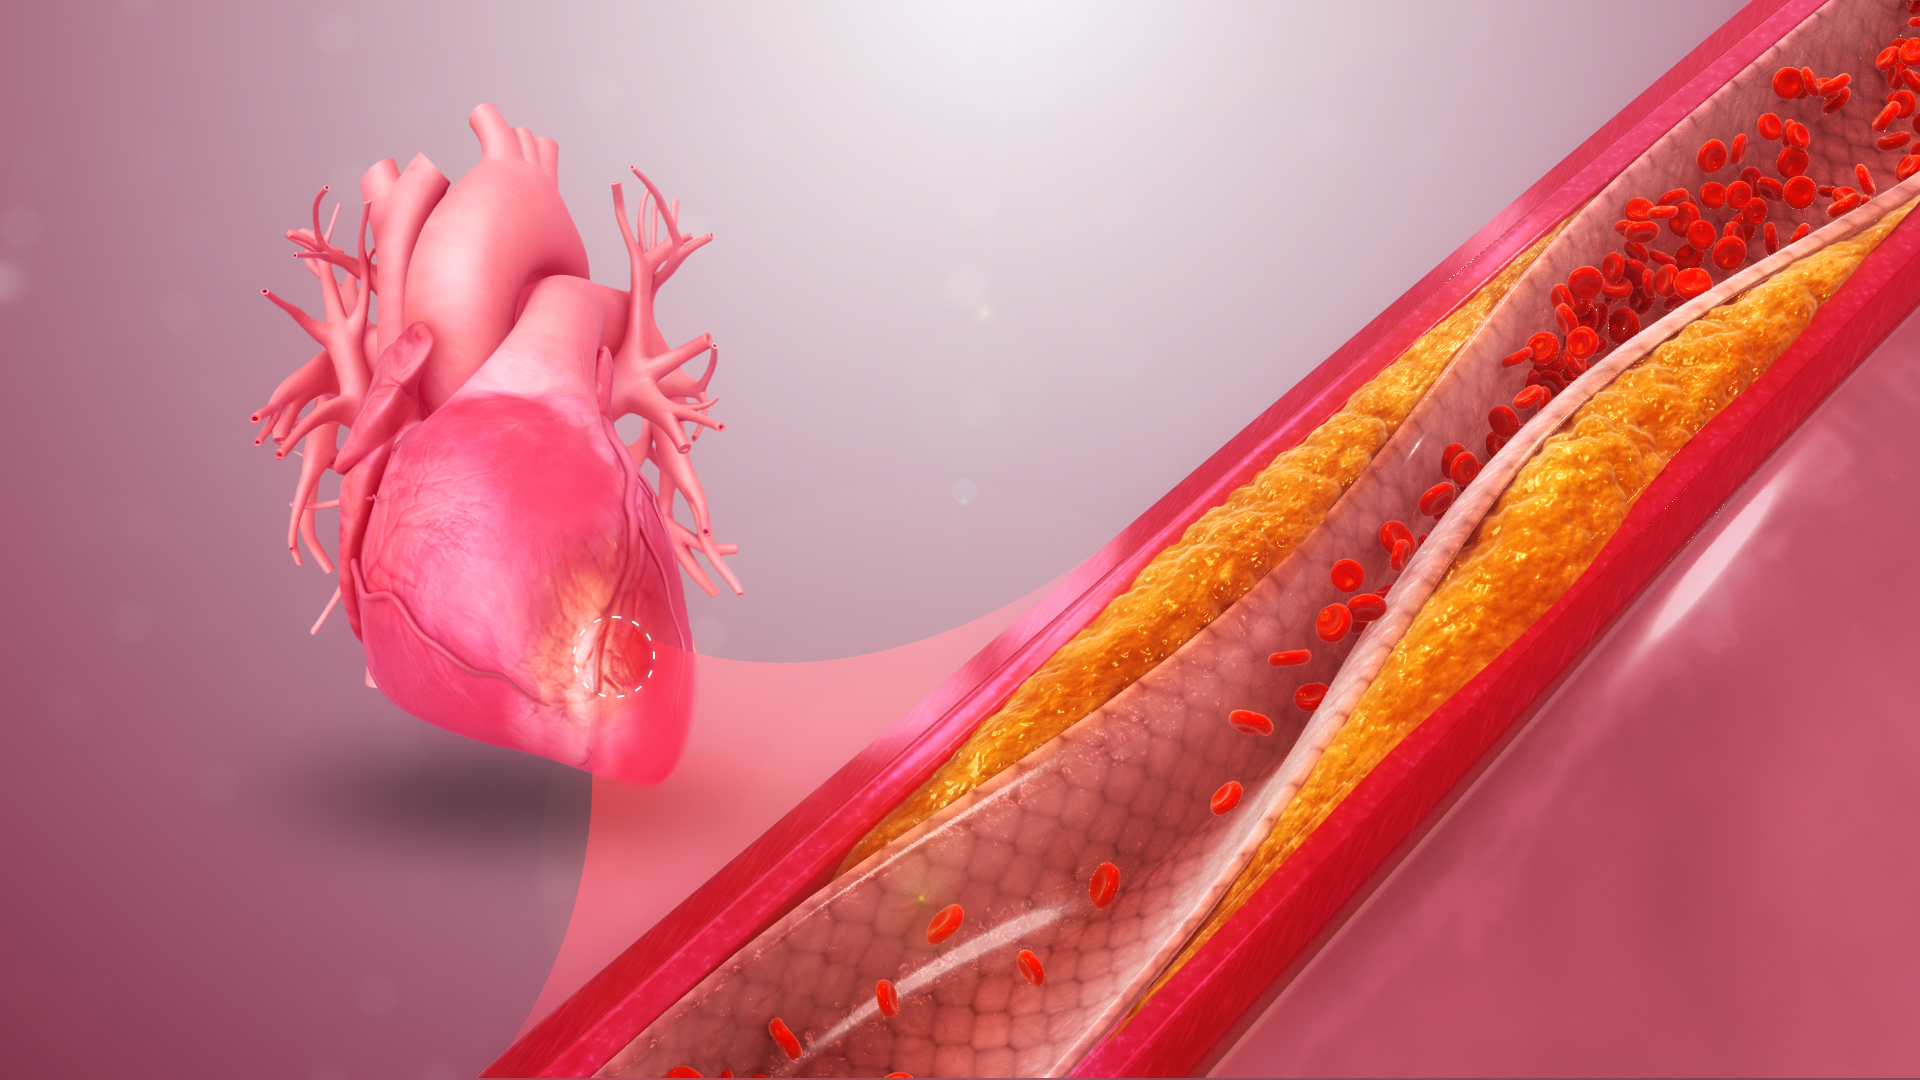 Medical Animation Still Shot Showing Acute Coronary-Artery-Disease